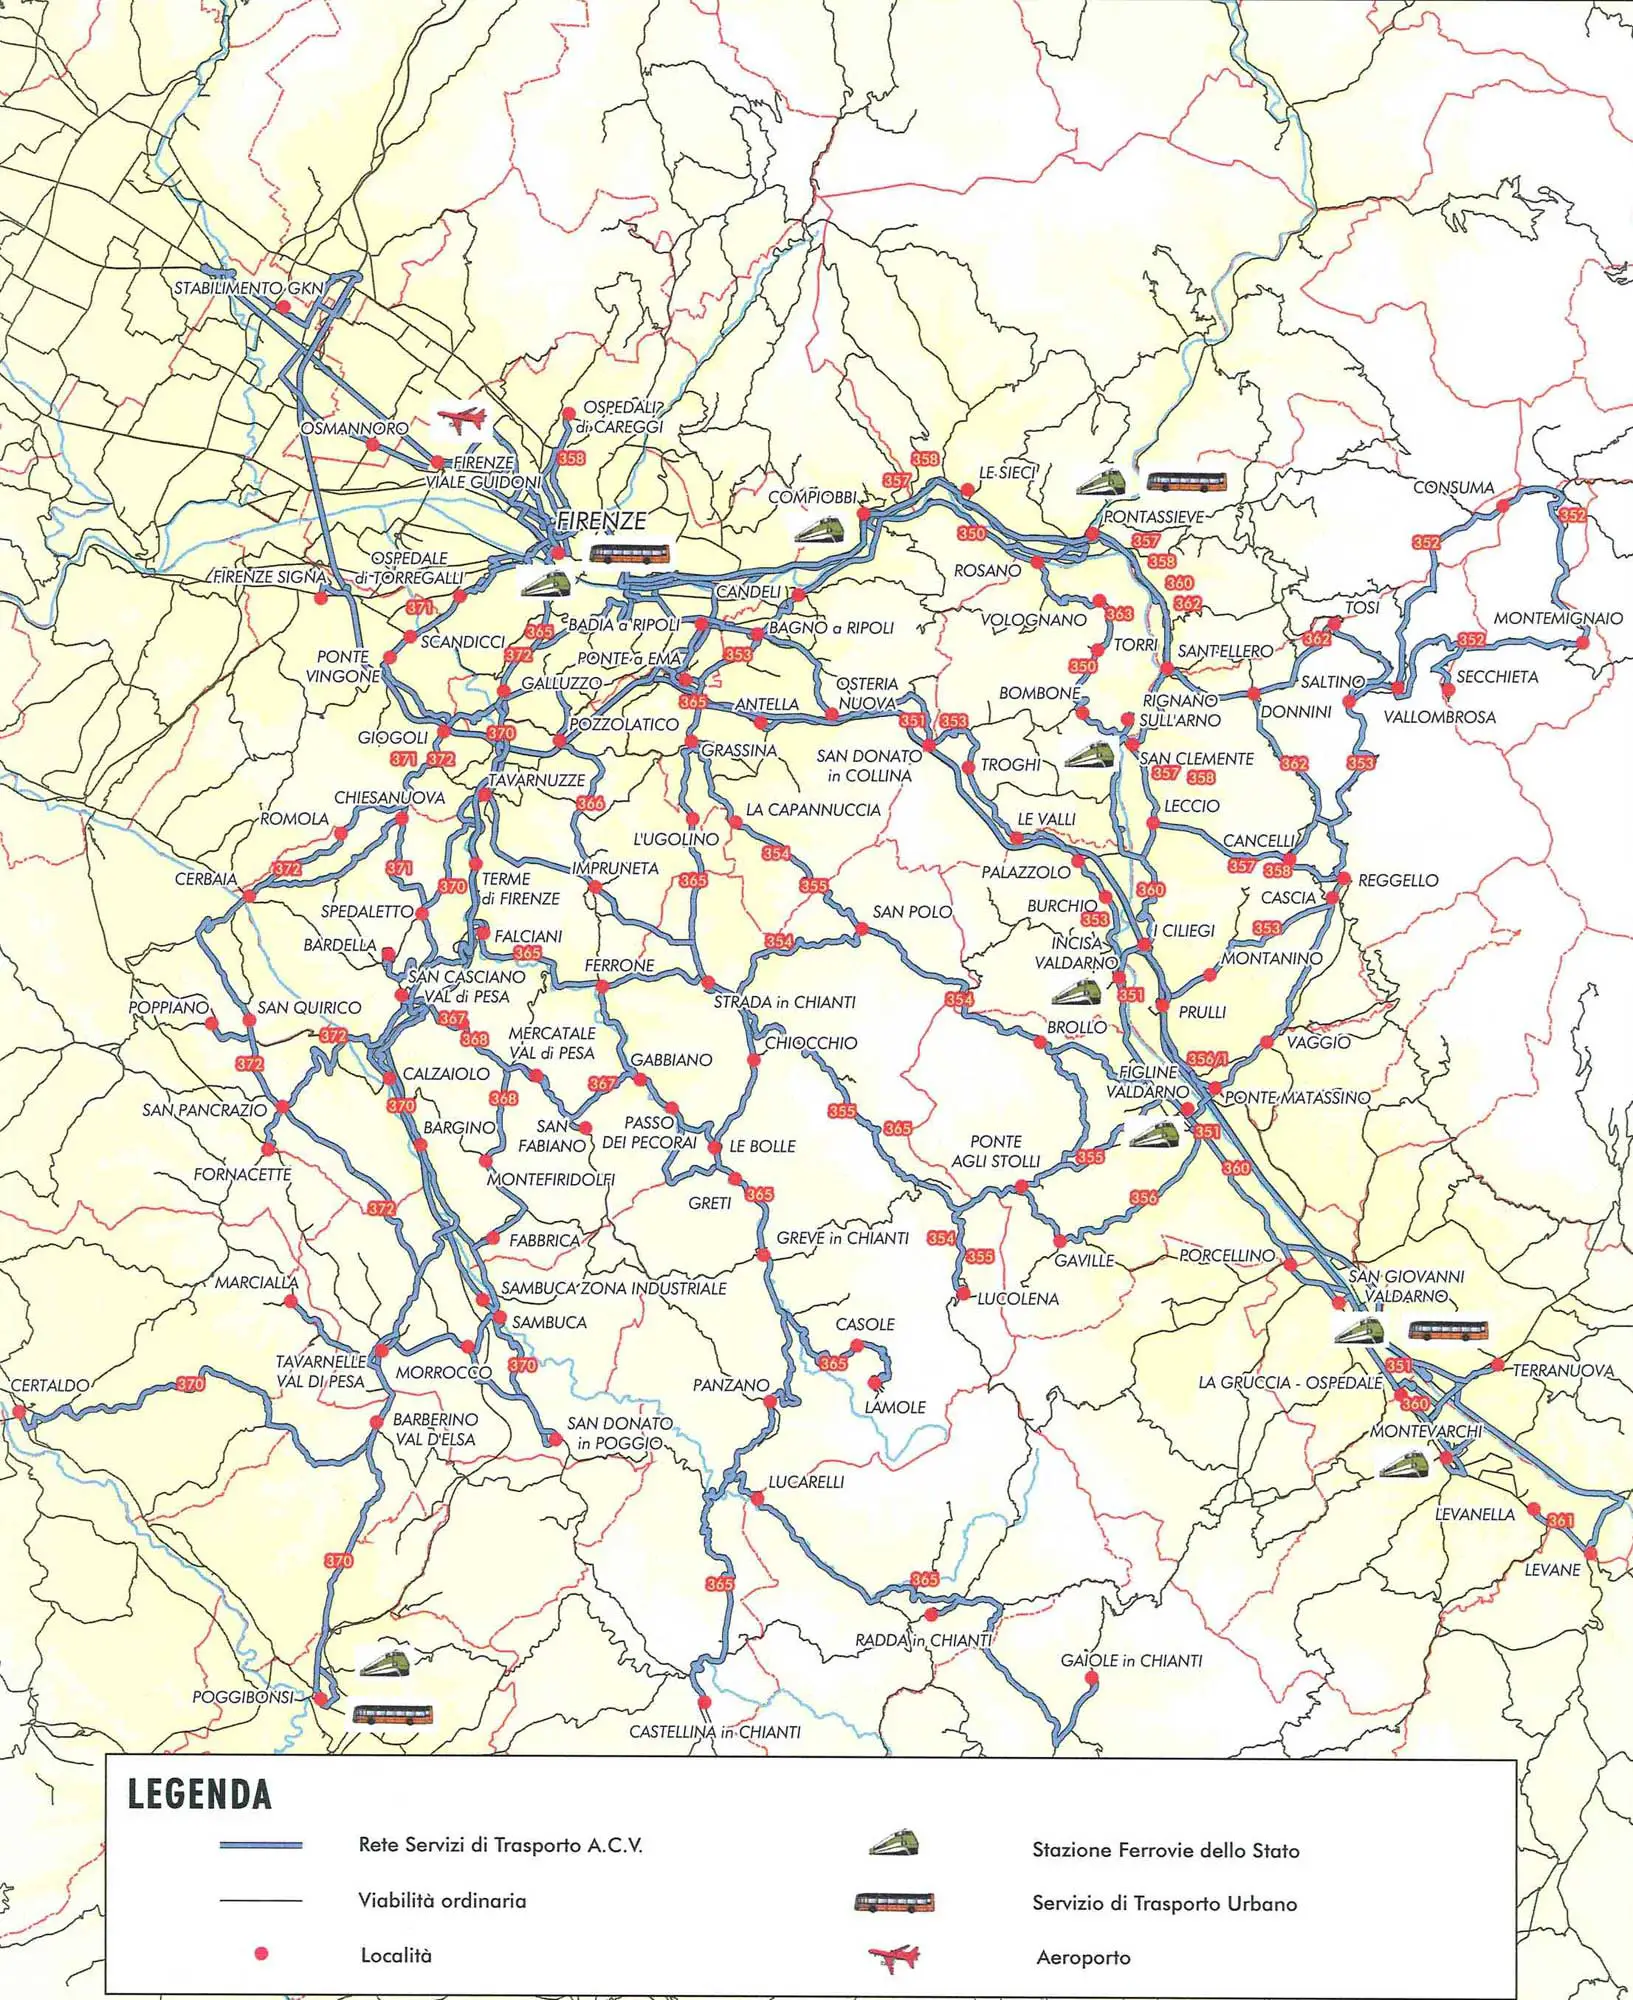 Transport Travel Map Florence (firenze)